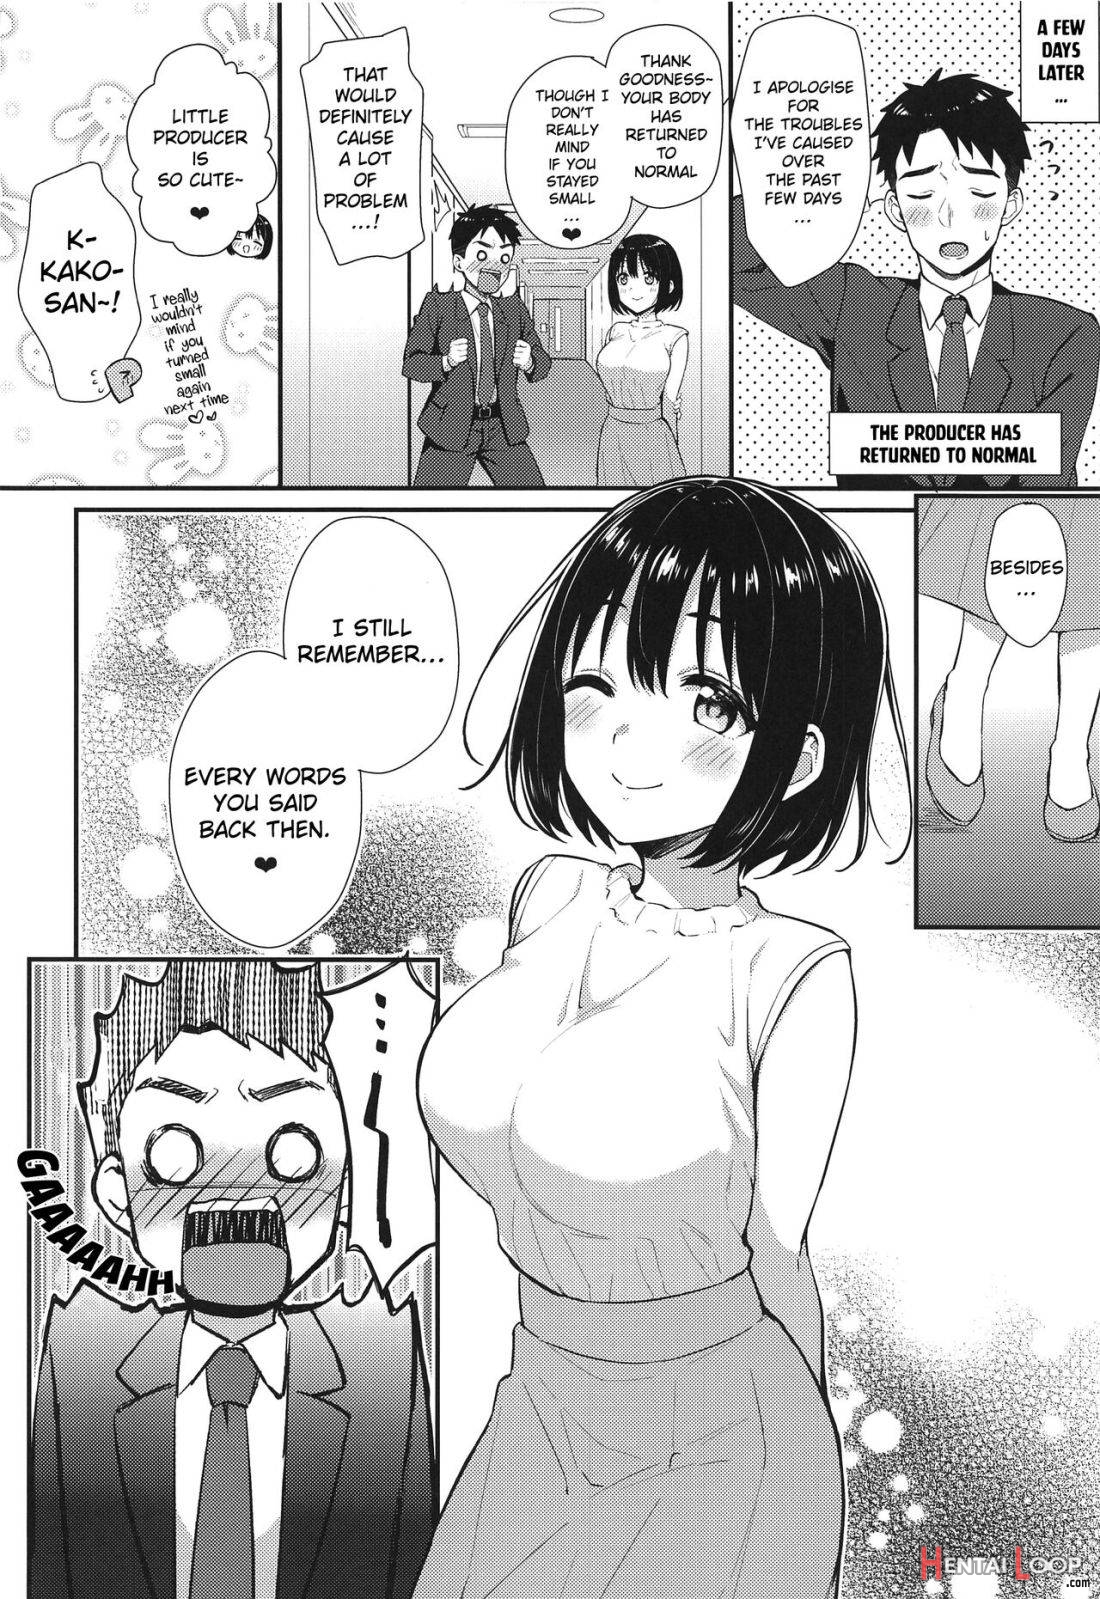 Kako-san to Shota P page 35